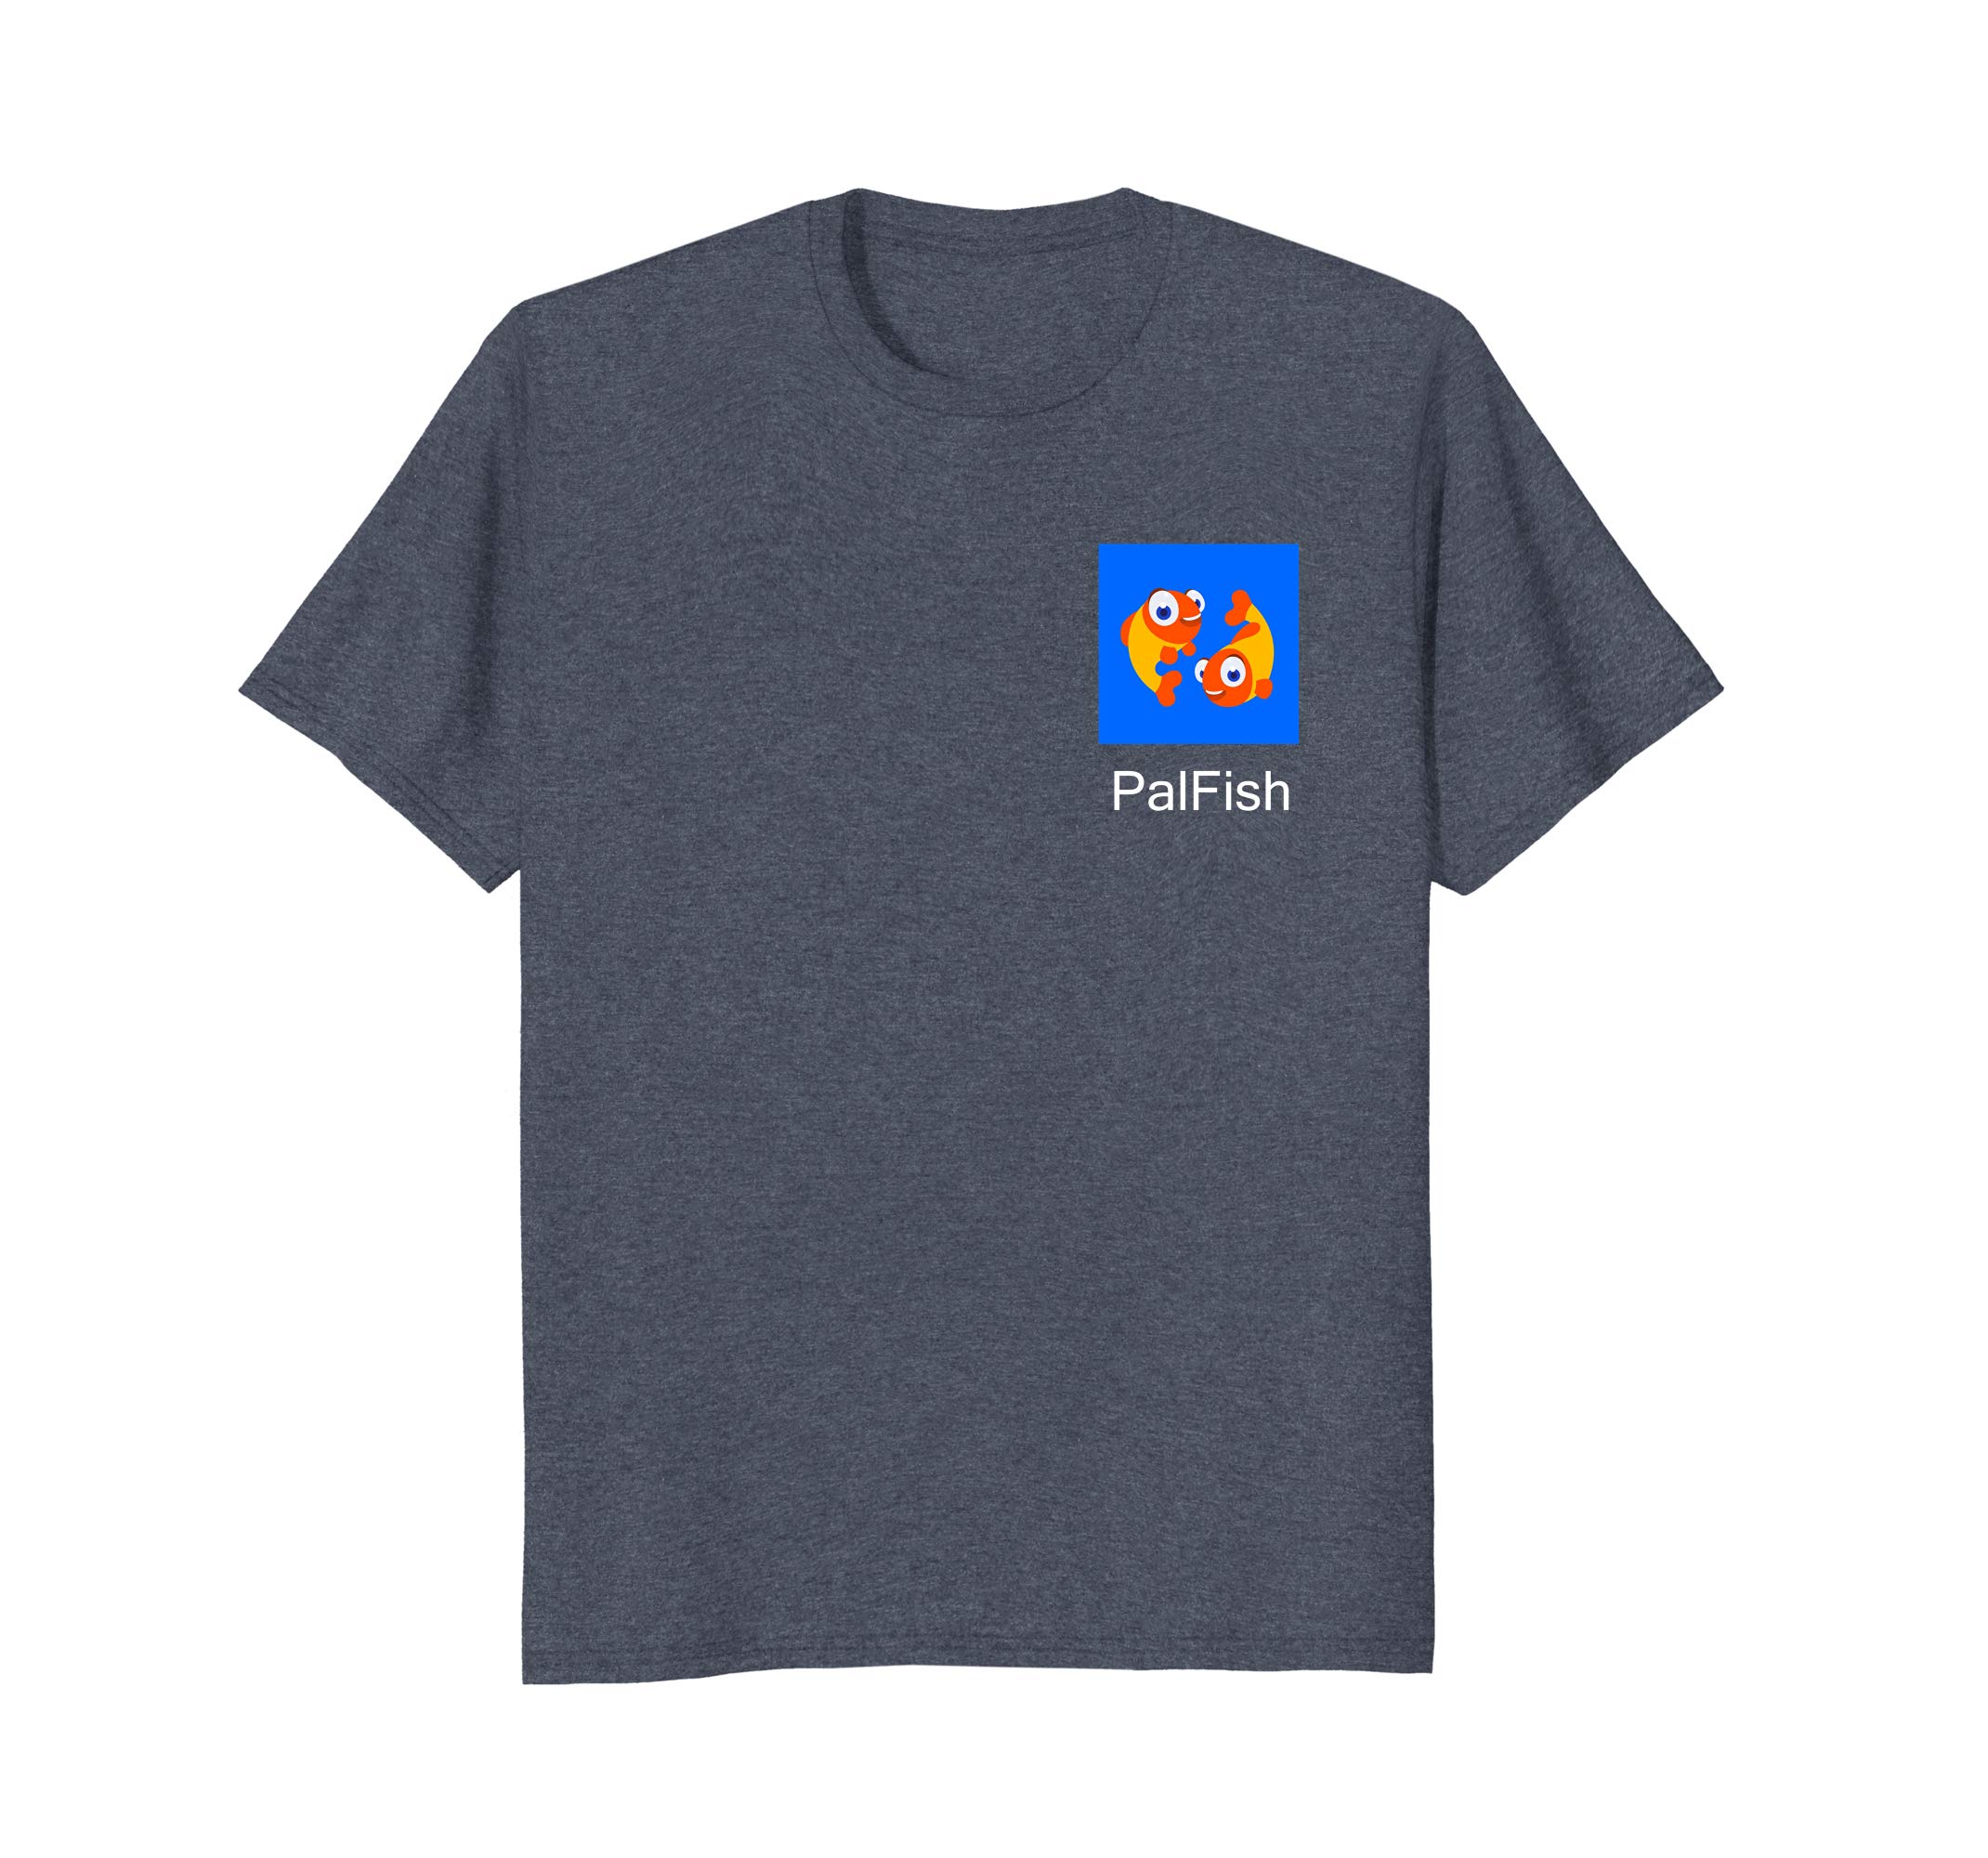 Amazon.com Small Logo - Amazon.com: Palfish Small Logo Teacher T-Shirt: Clothing